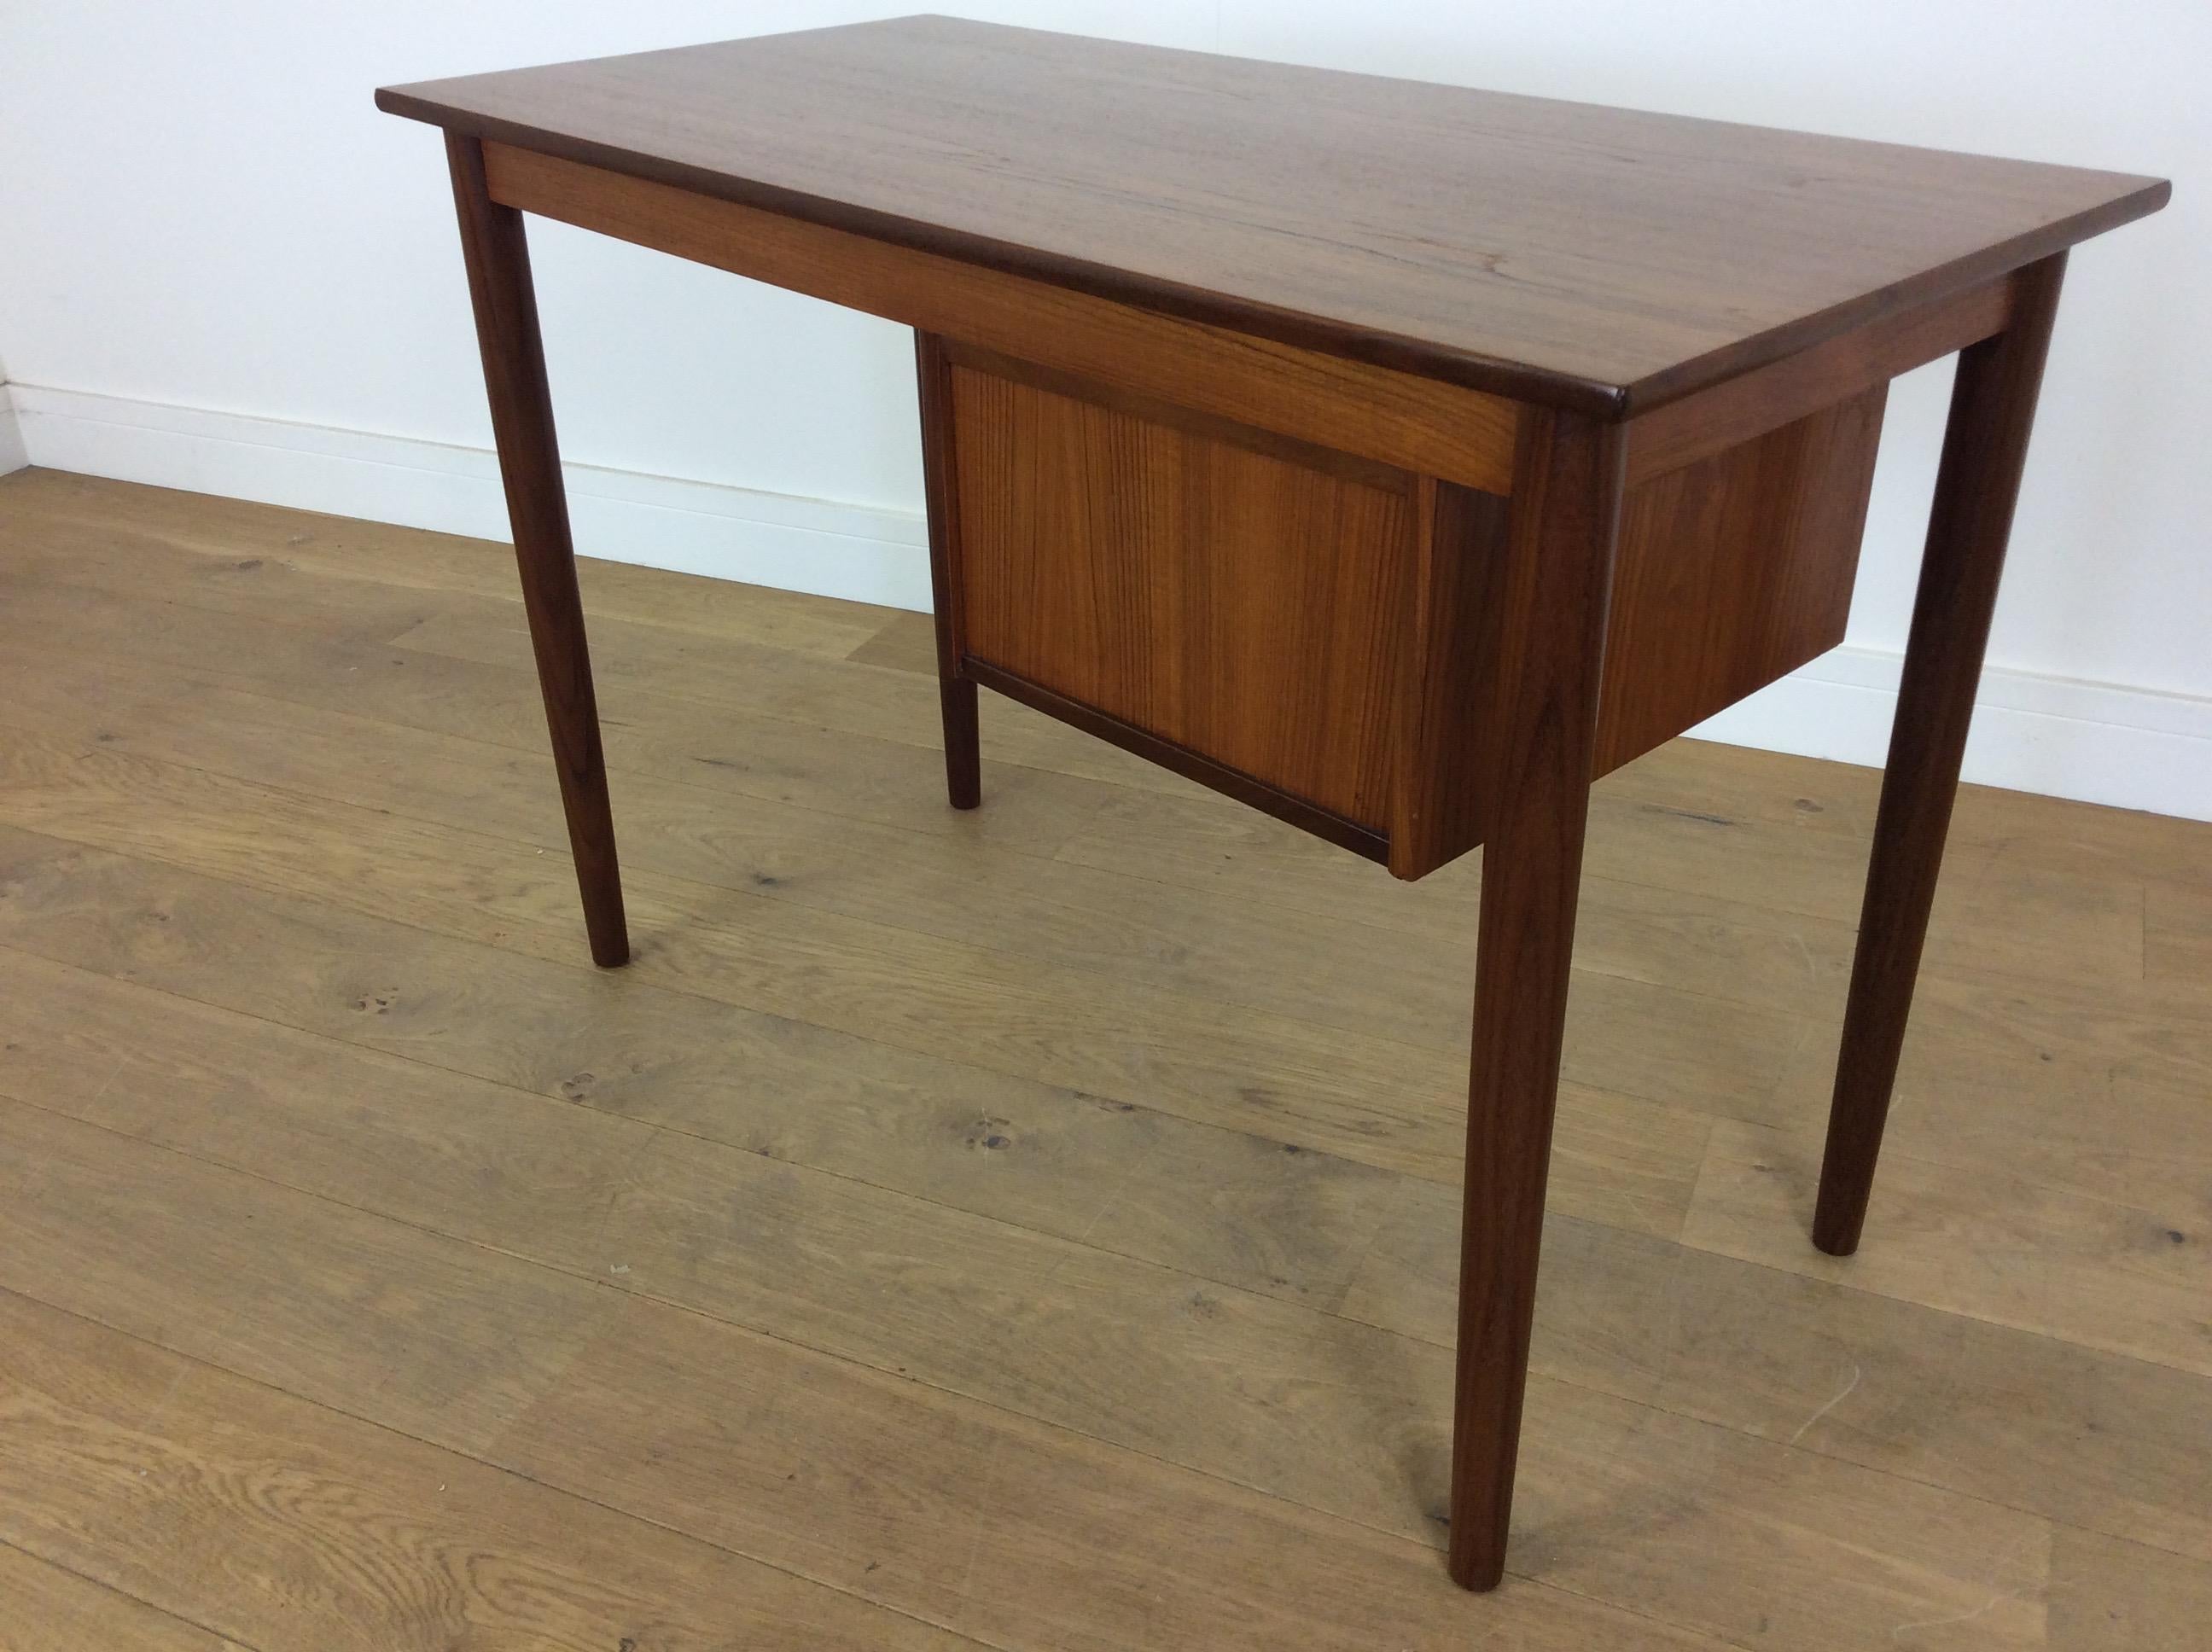 Midcentury teak desk.
mid century two drawer Danish teak desk.
By VI-MA Mobler
73 cm h 104.5 cm w 52 cm d
C 1960